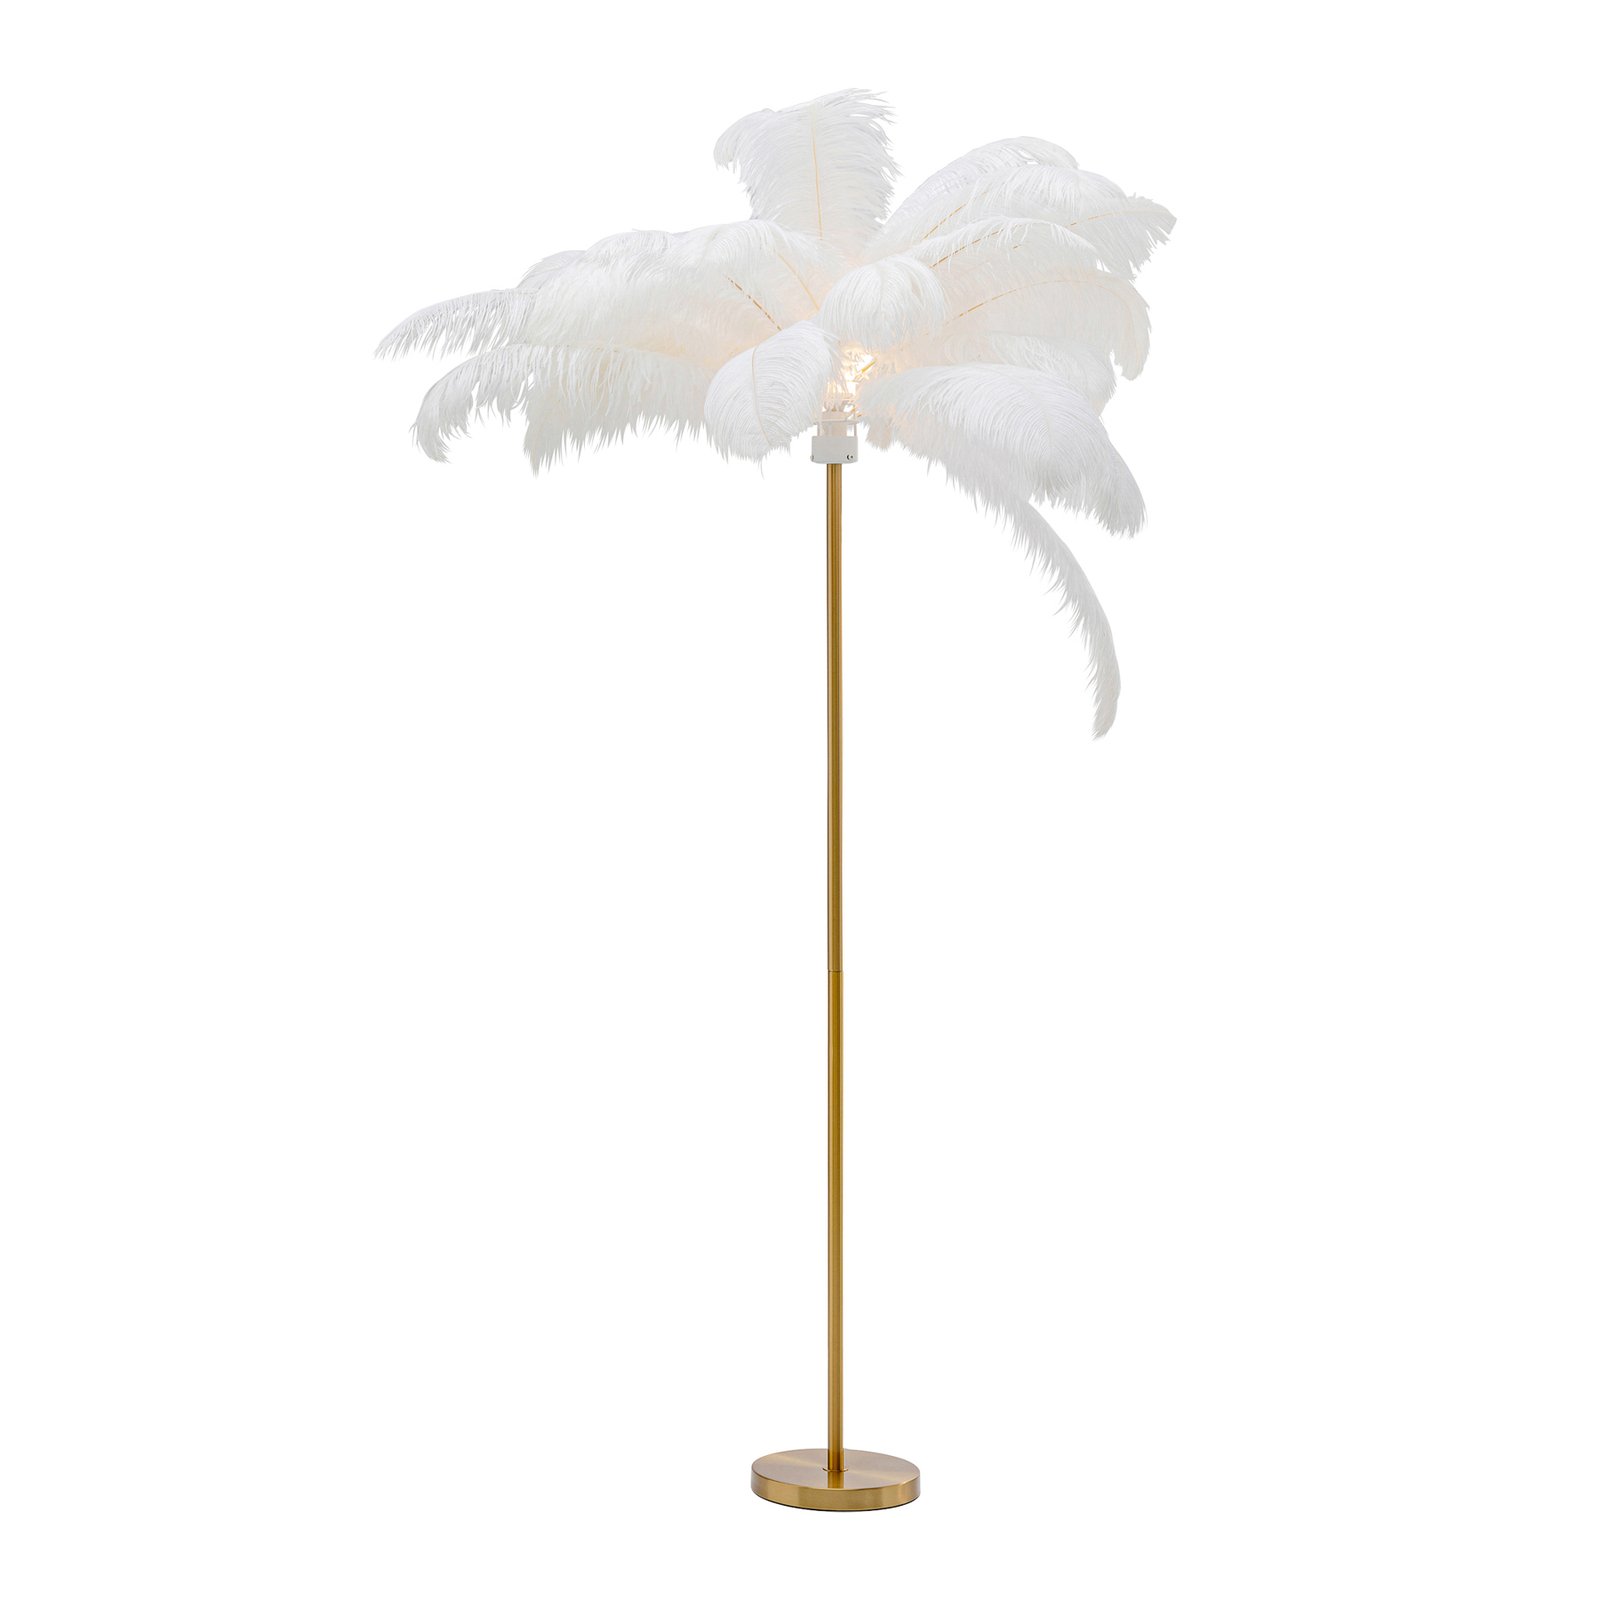 KARE Feather Palm gulvlampe med fjær, hvit